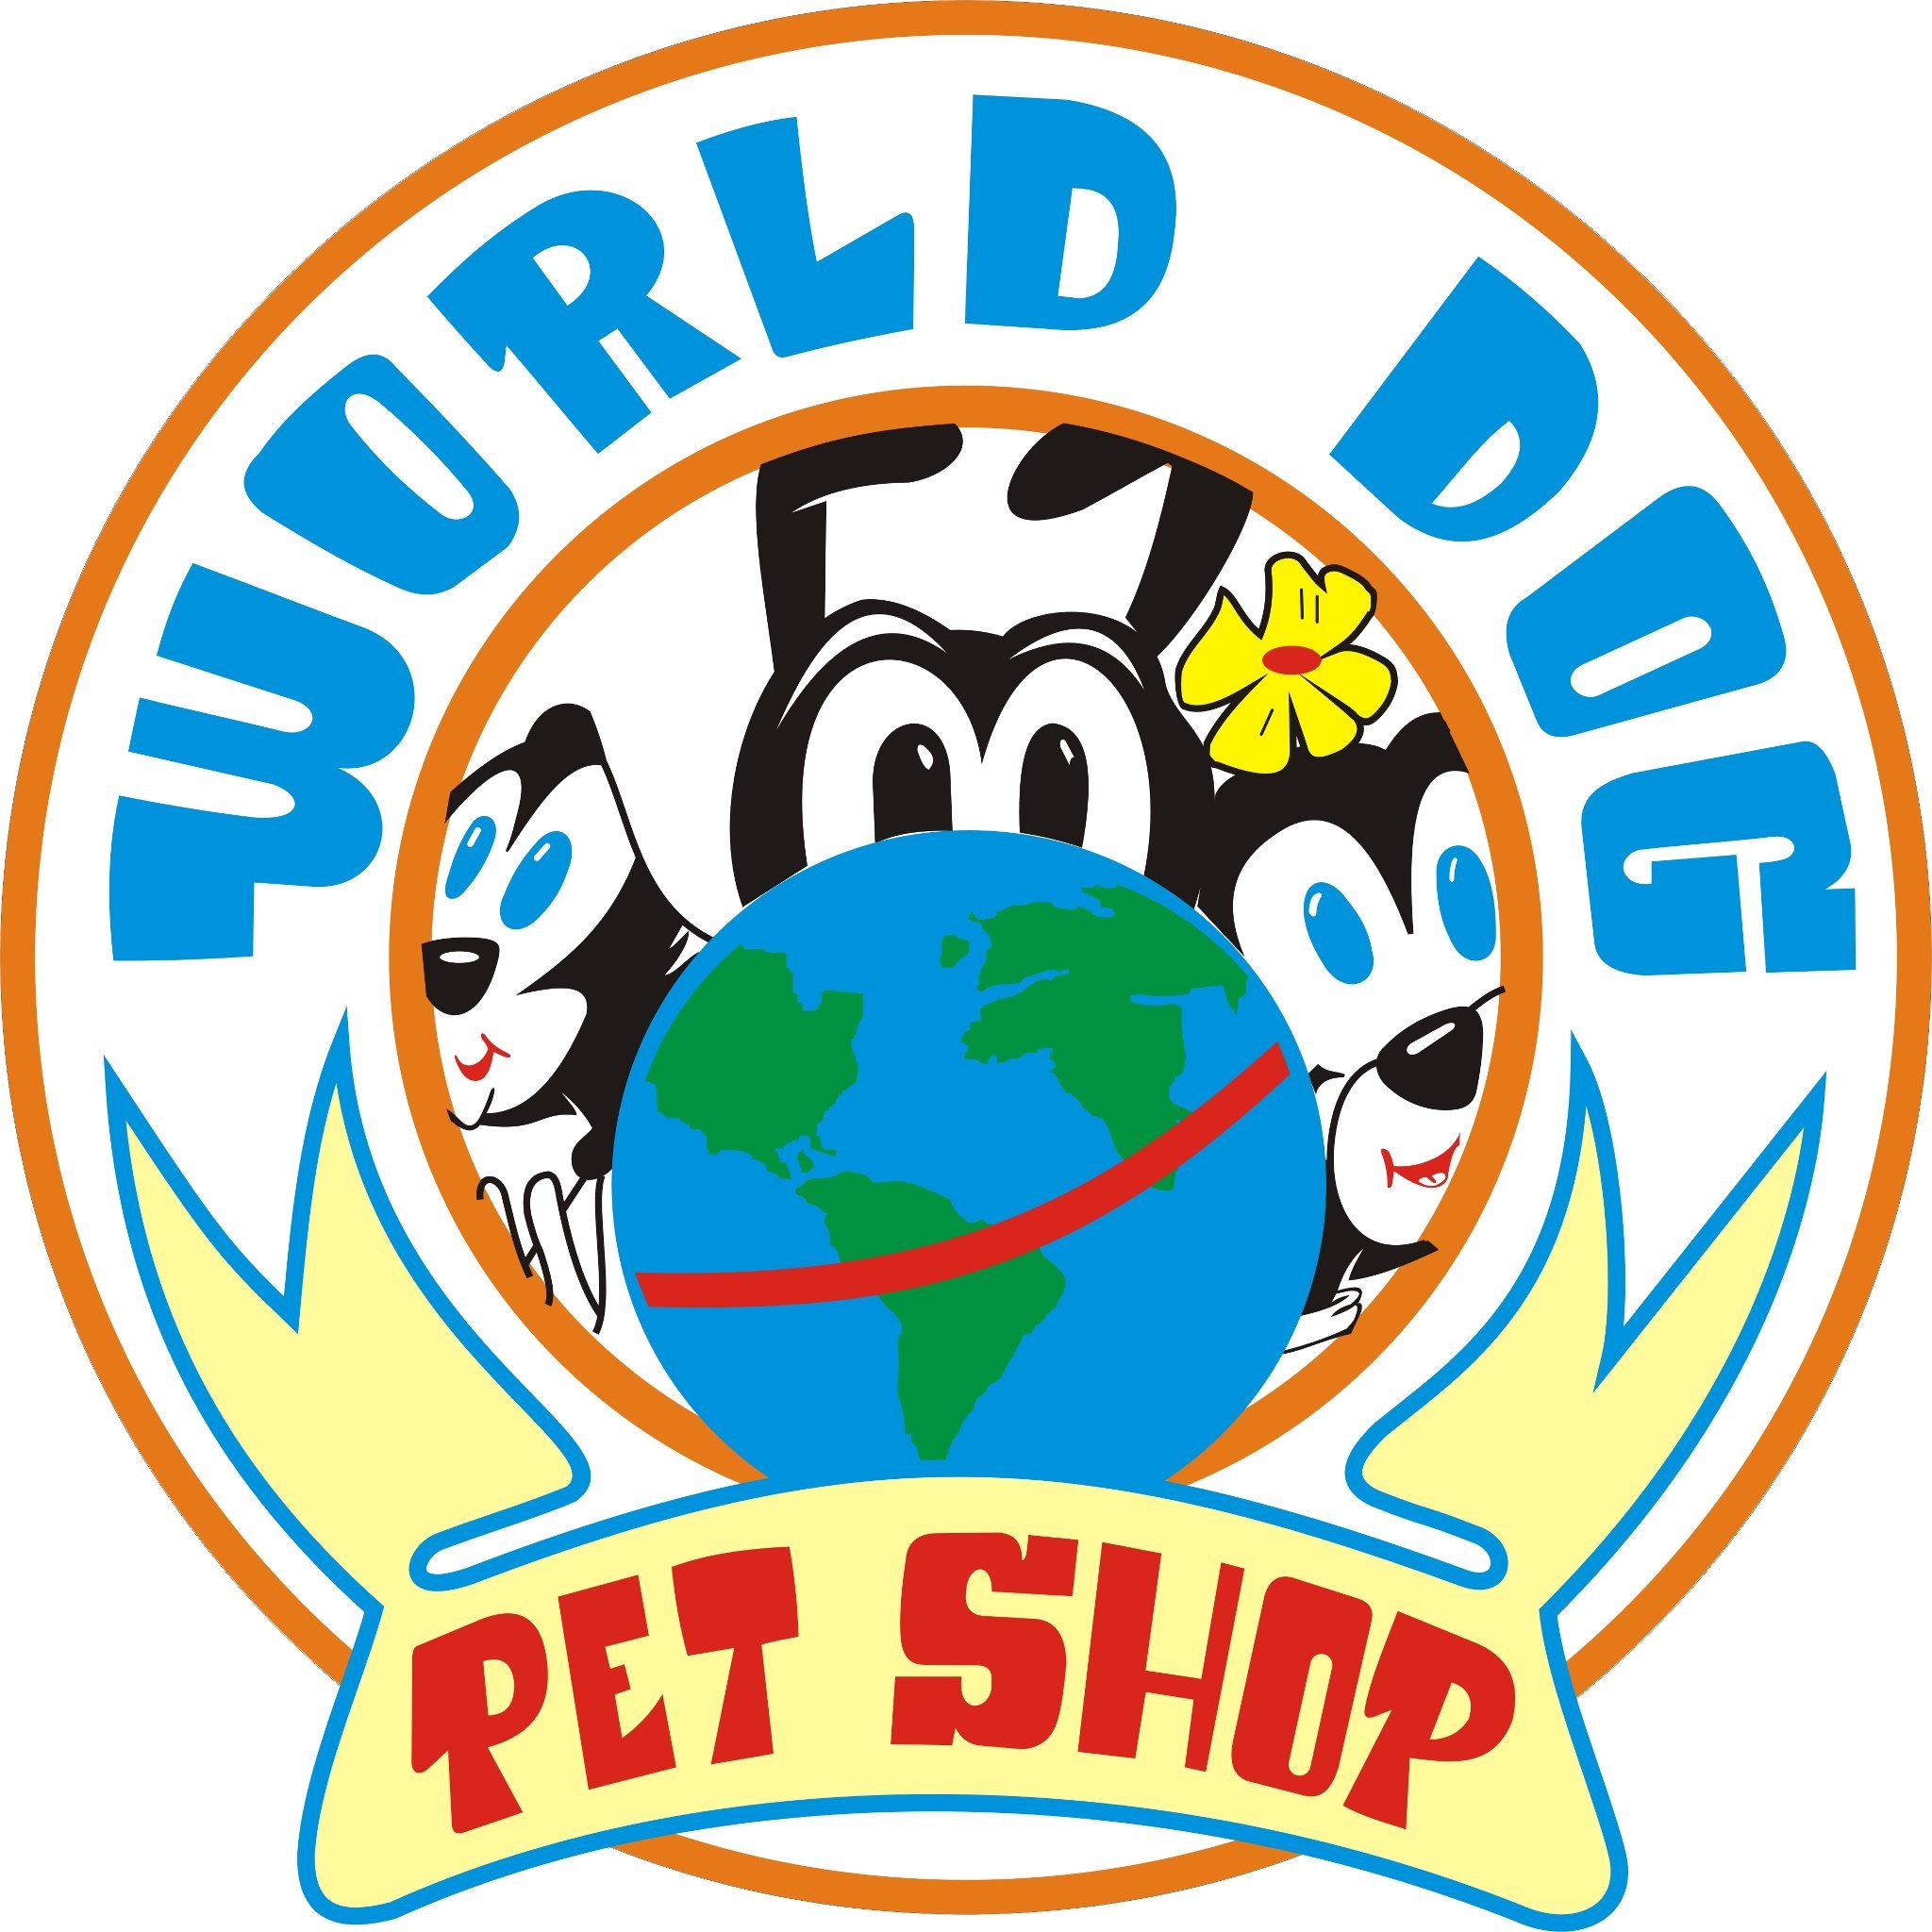 World Dog Pet Shop em Jundiaí